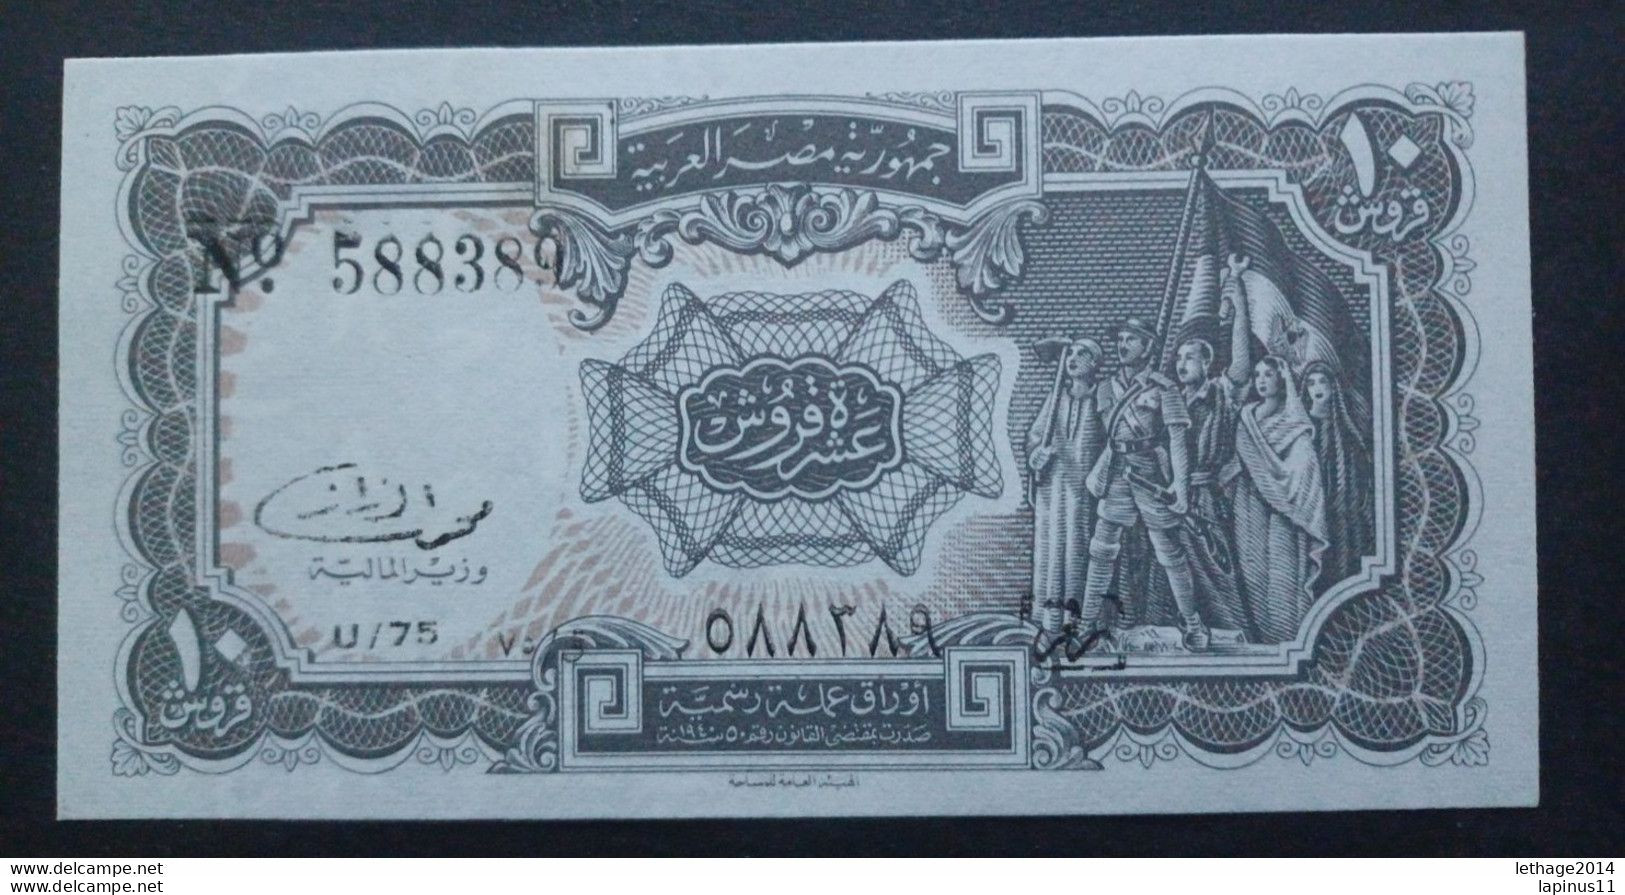 BANKNOTE EGYPT مصر EGYPT 10 PIASTRES 1952 UNCIRCULATED ERROR PRINT - Egitto